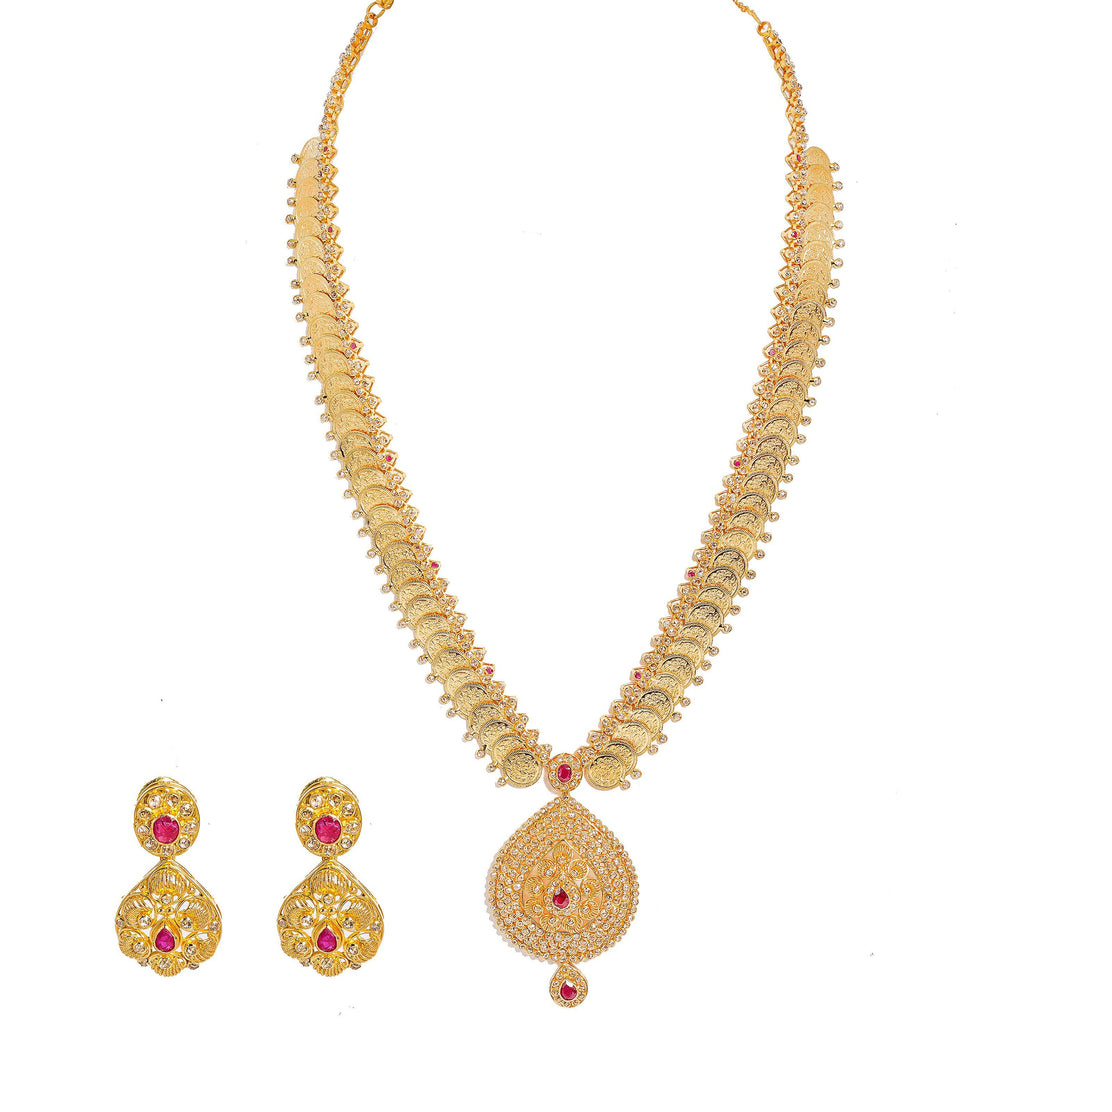 Fascinating Uncut Diamond Necklace - Indian Jewellery Designs